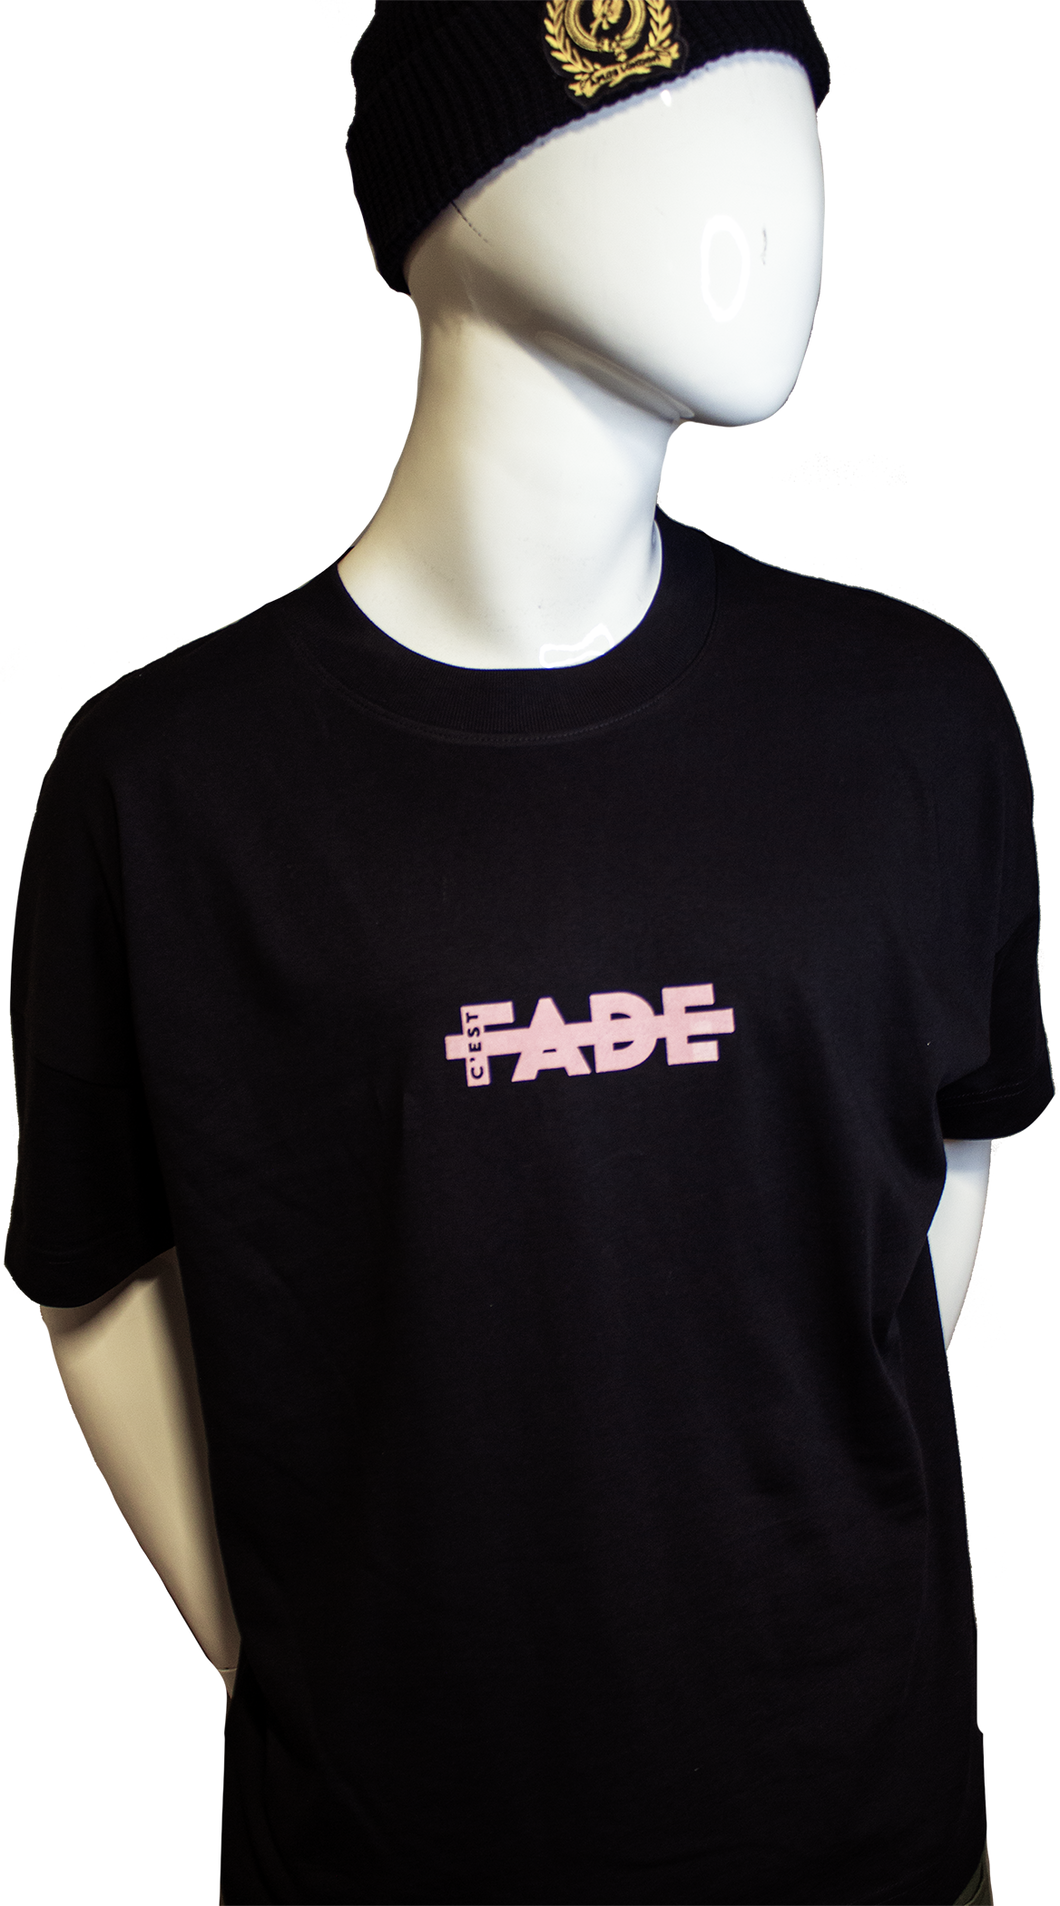 Cestfade small logo print on Black oversized T-shirt with pink flock print